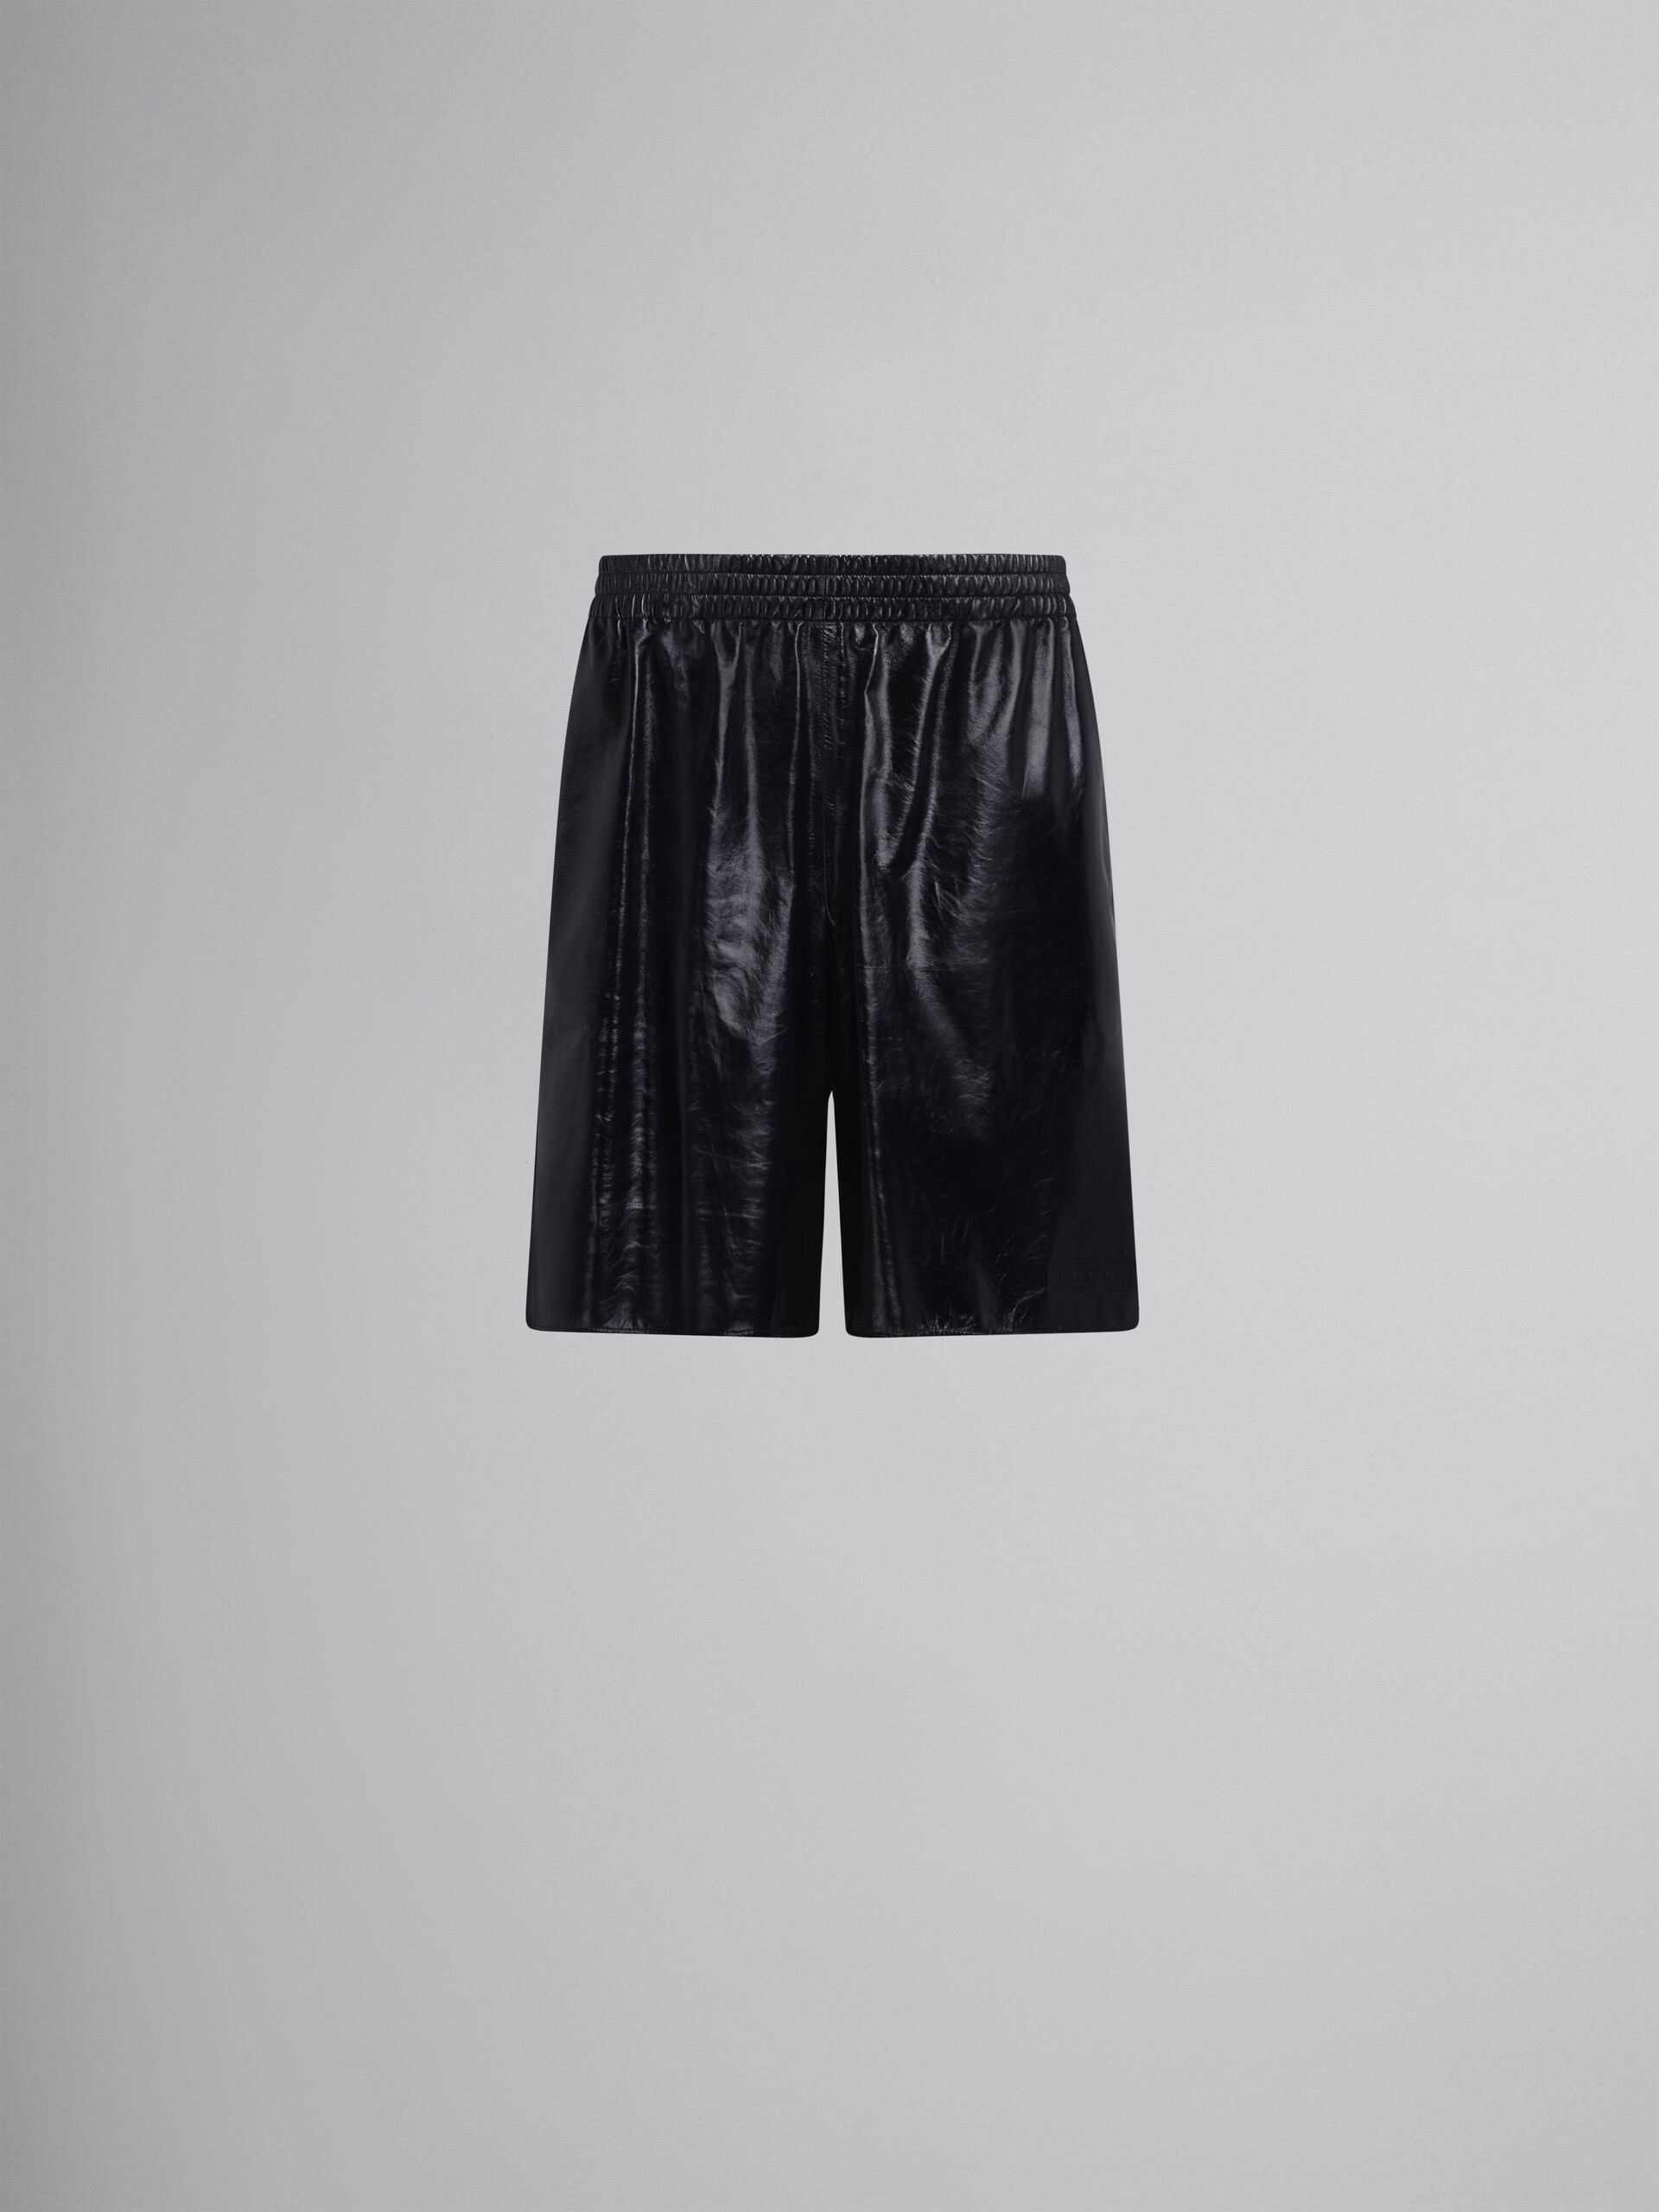 Black bermuda shorts in ultralight naplak leather - Pants - Image 1